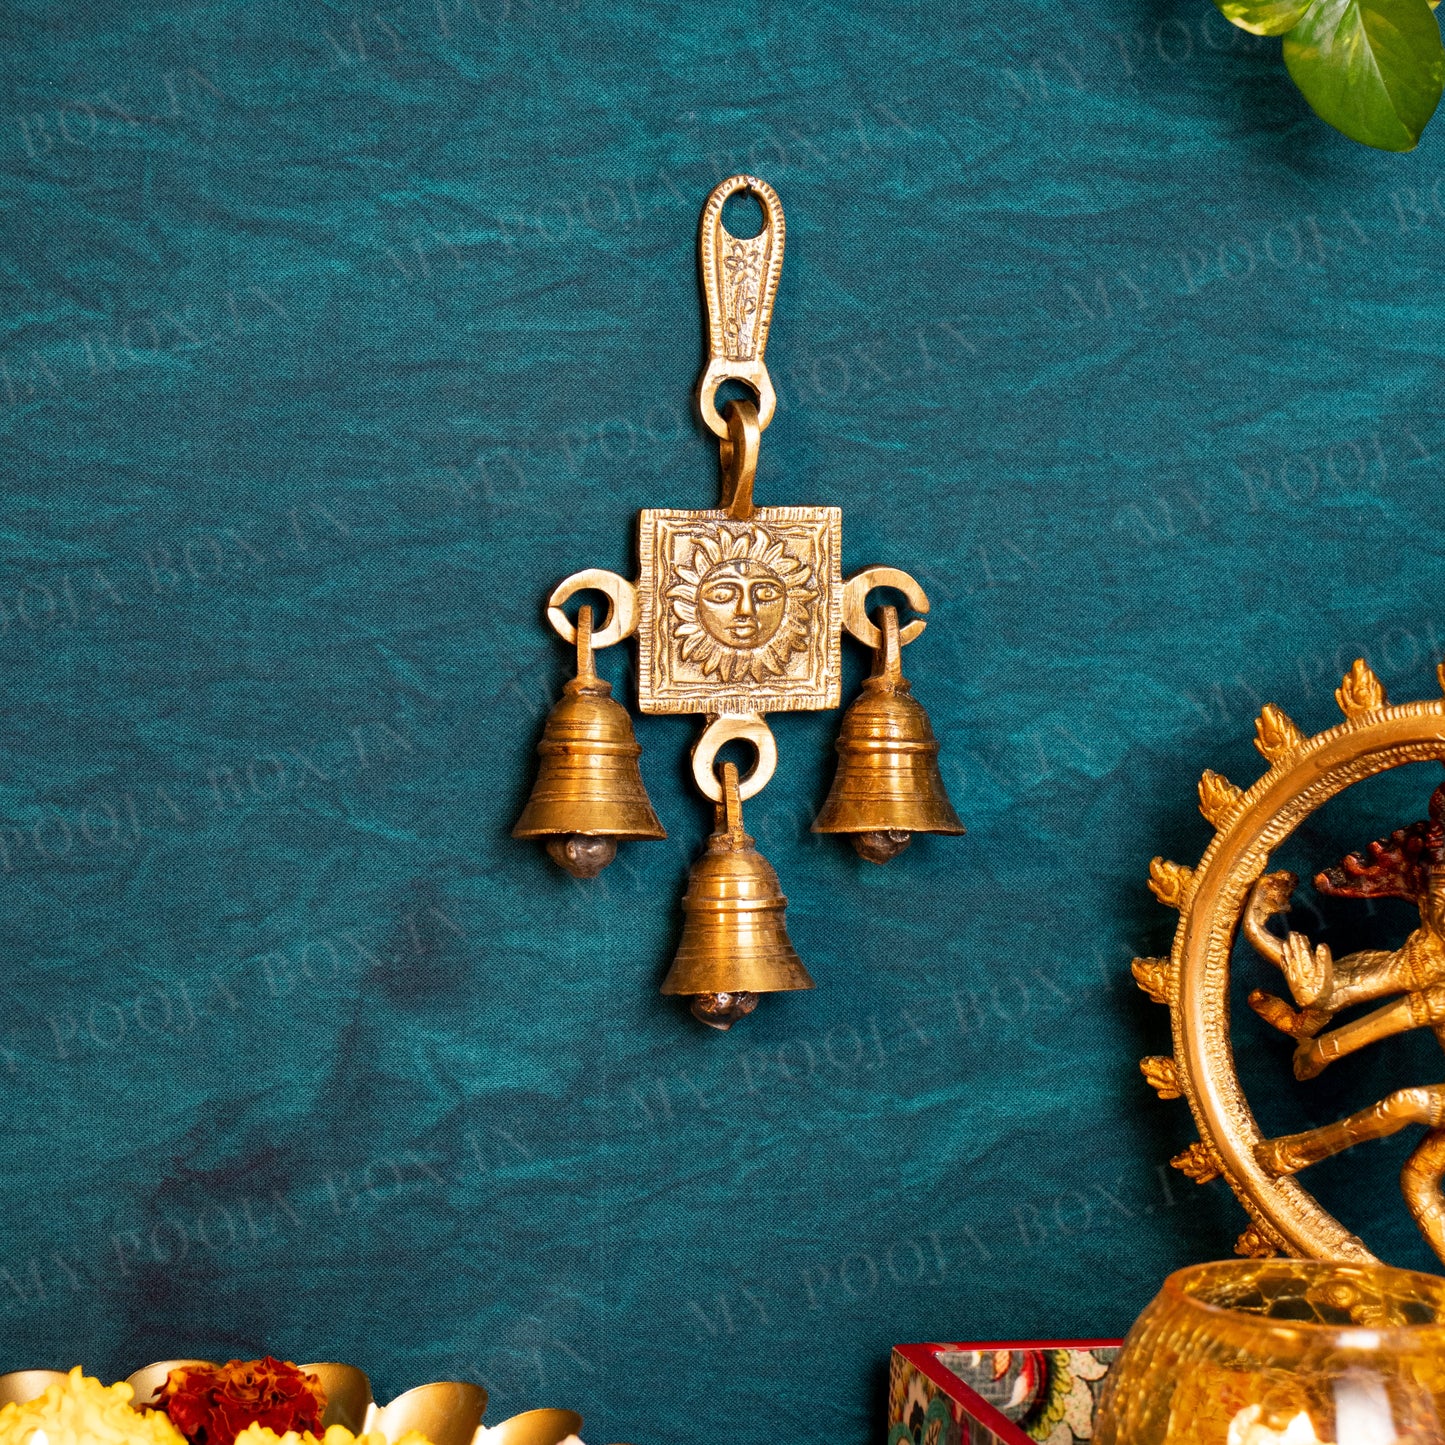 Antique Brass 3 Bells Door/Wall Hanging with Engraved Sun God